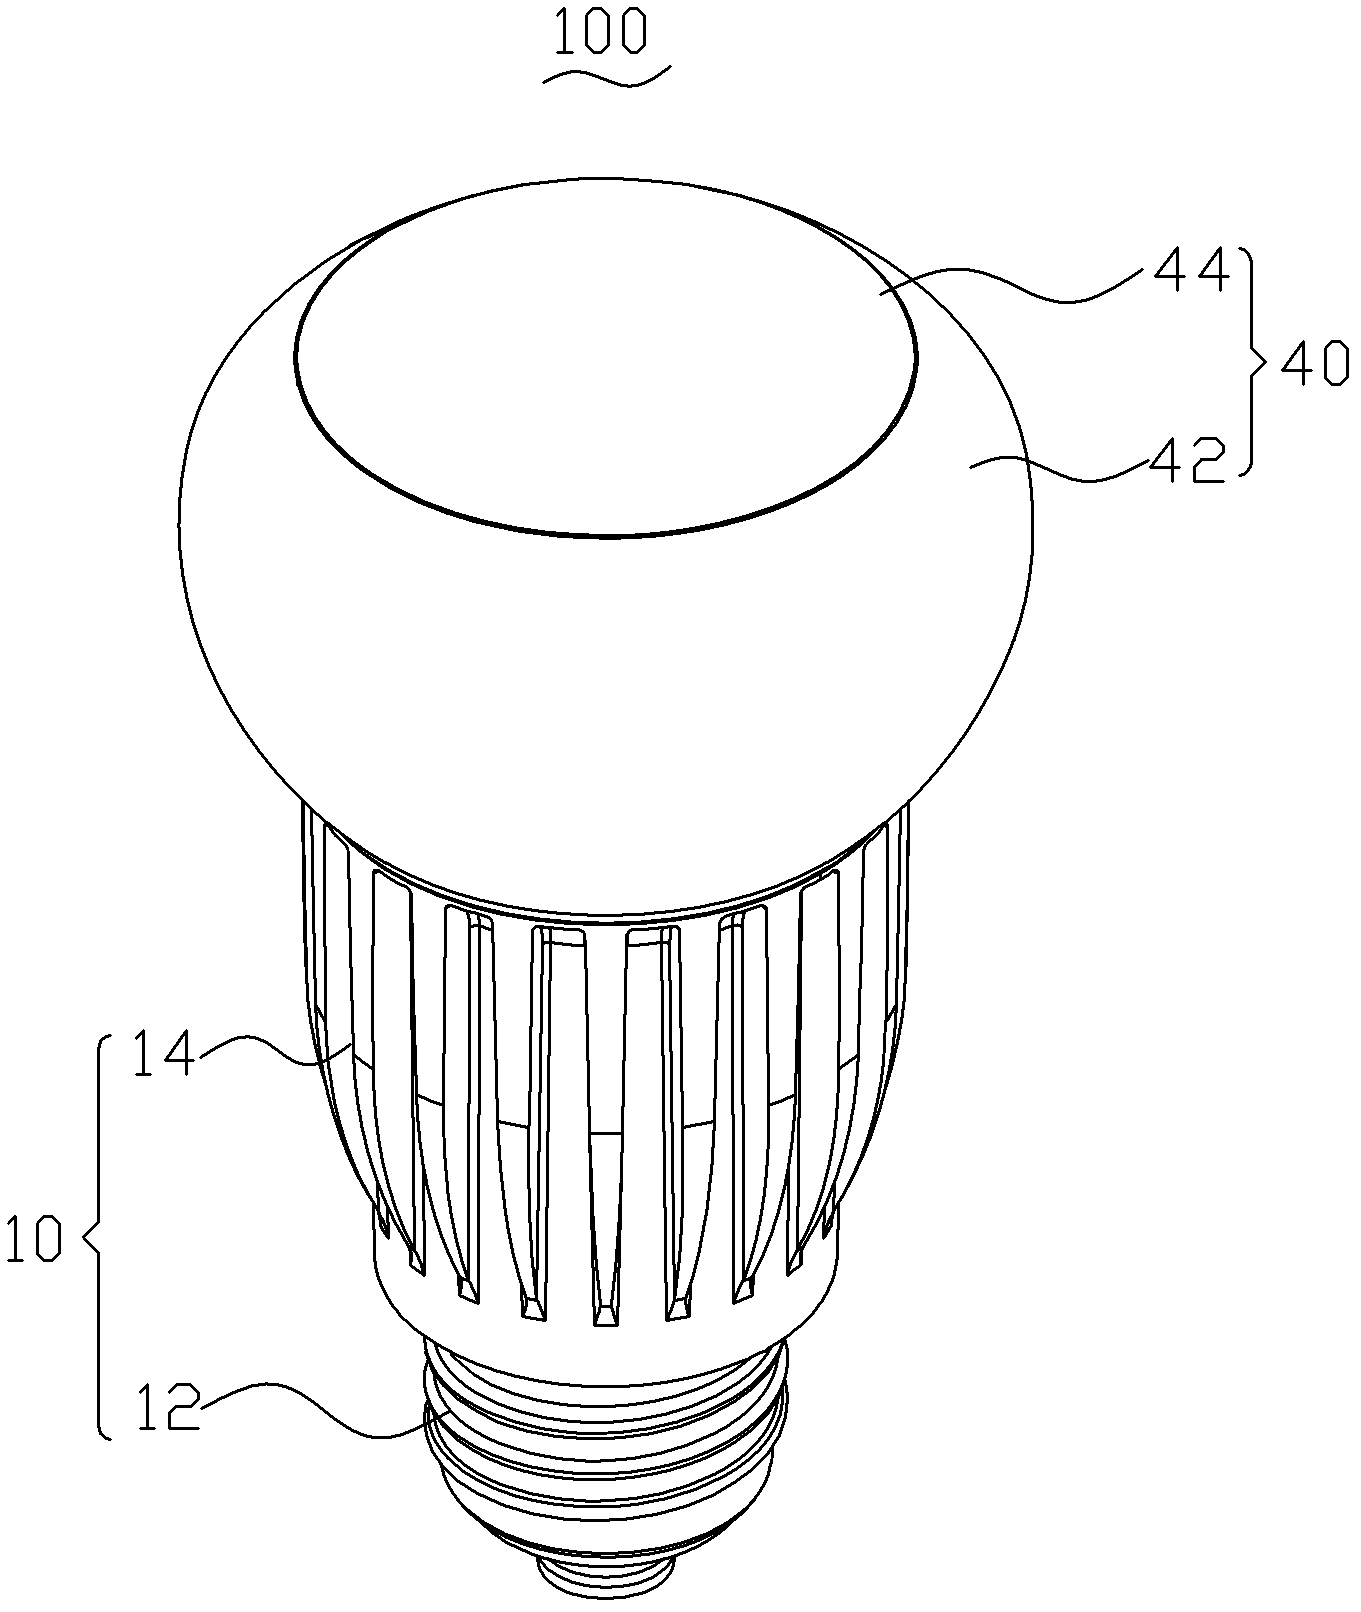 Large-angle omnidirectional lighting LED (light emitting diode) lamp